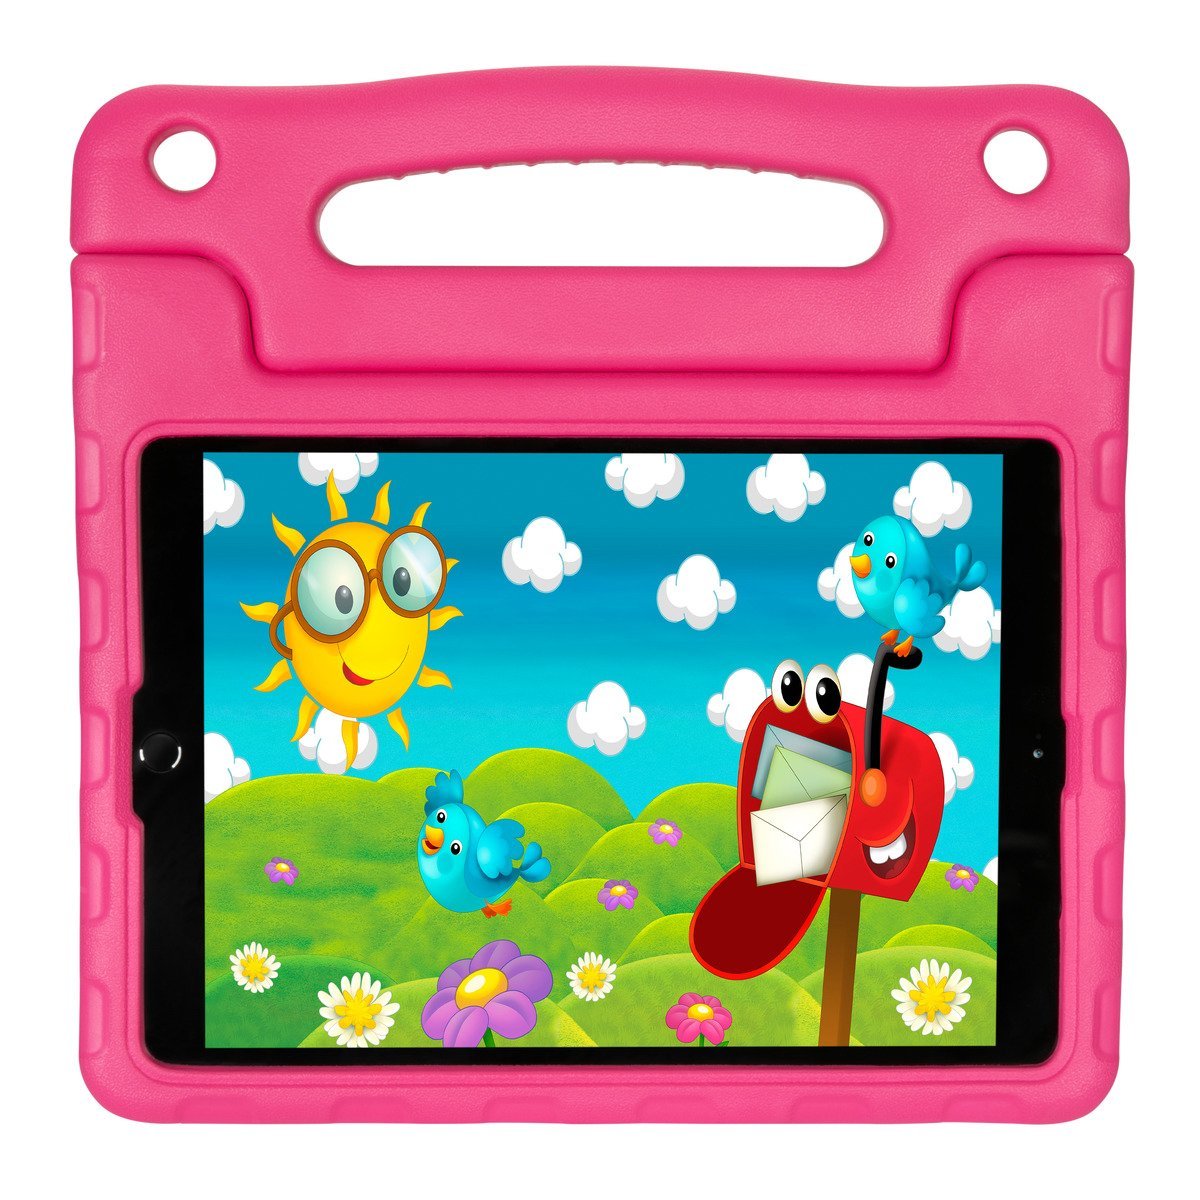 Cute iPad Case for Kids | Pink iPad Case | Targus